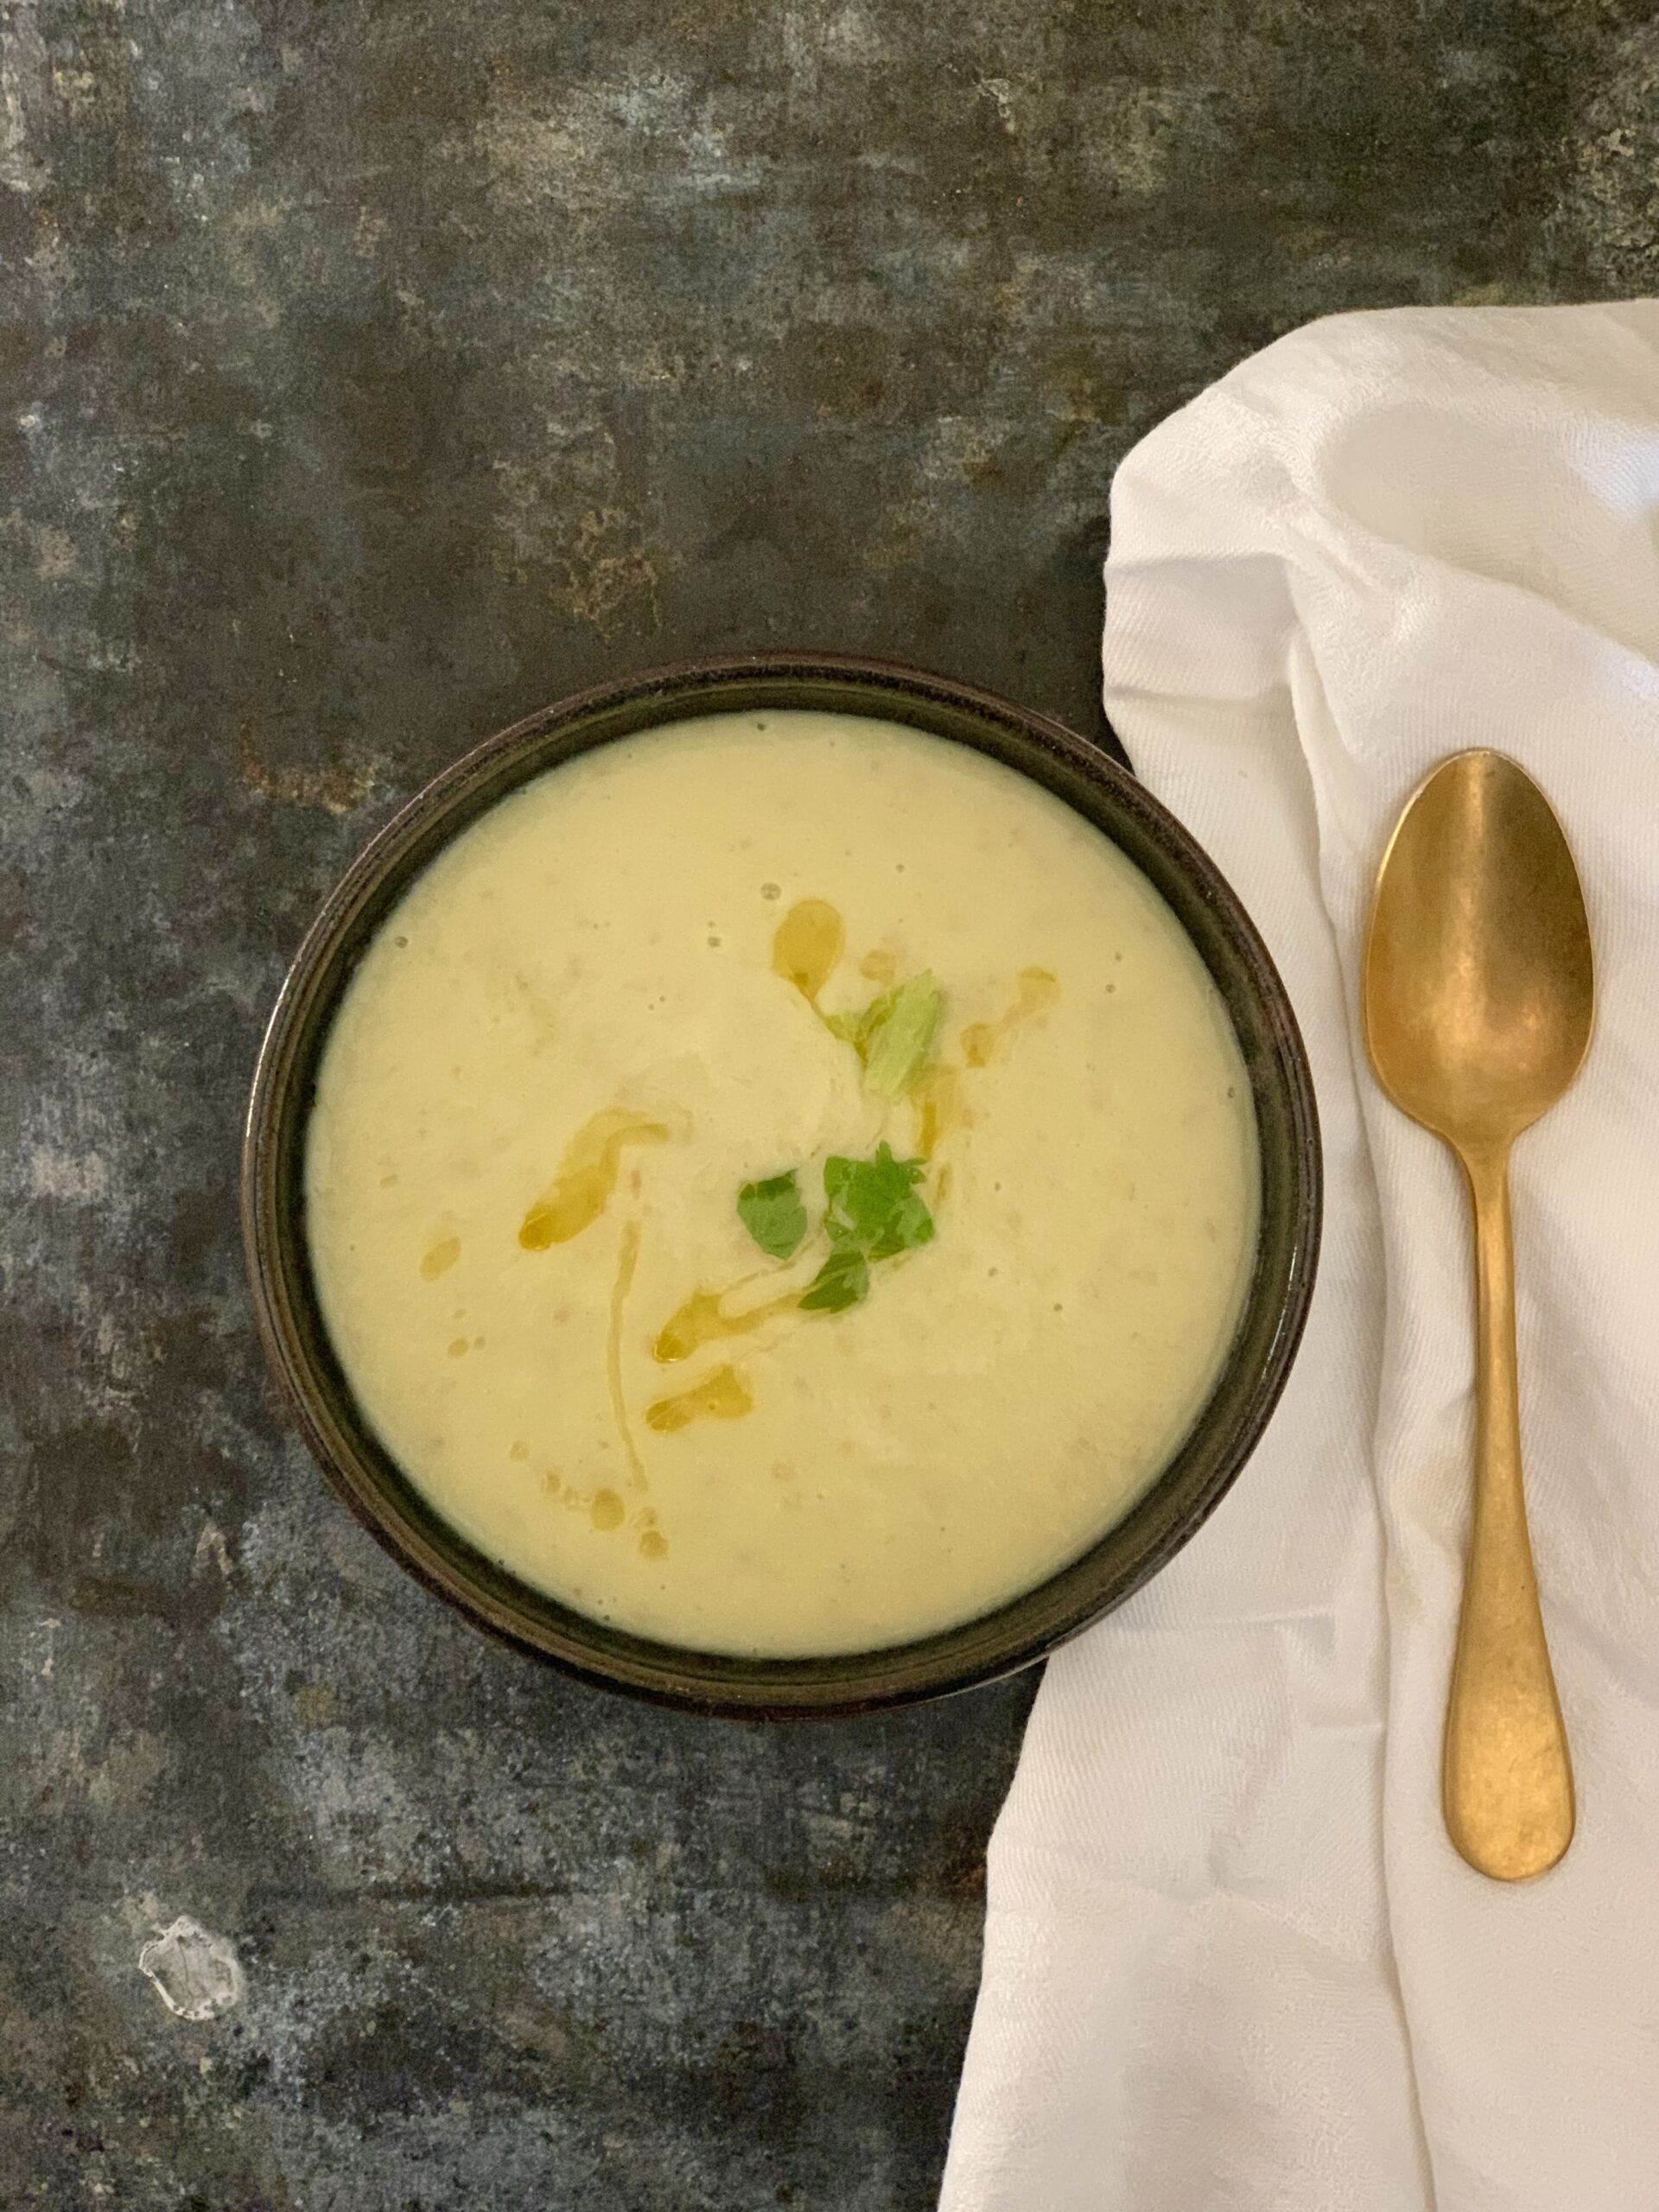 lauren liess' simple celery broth soup